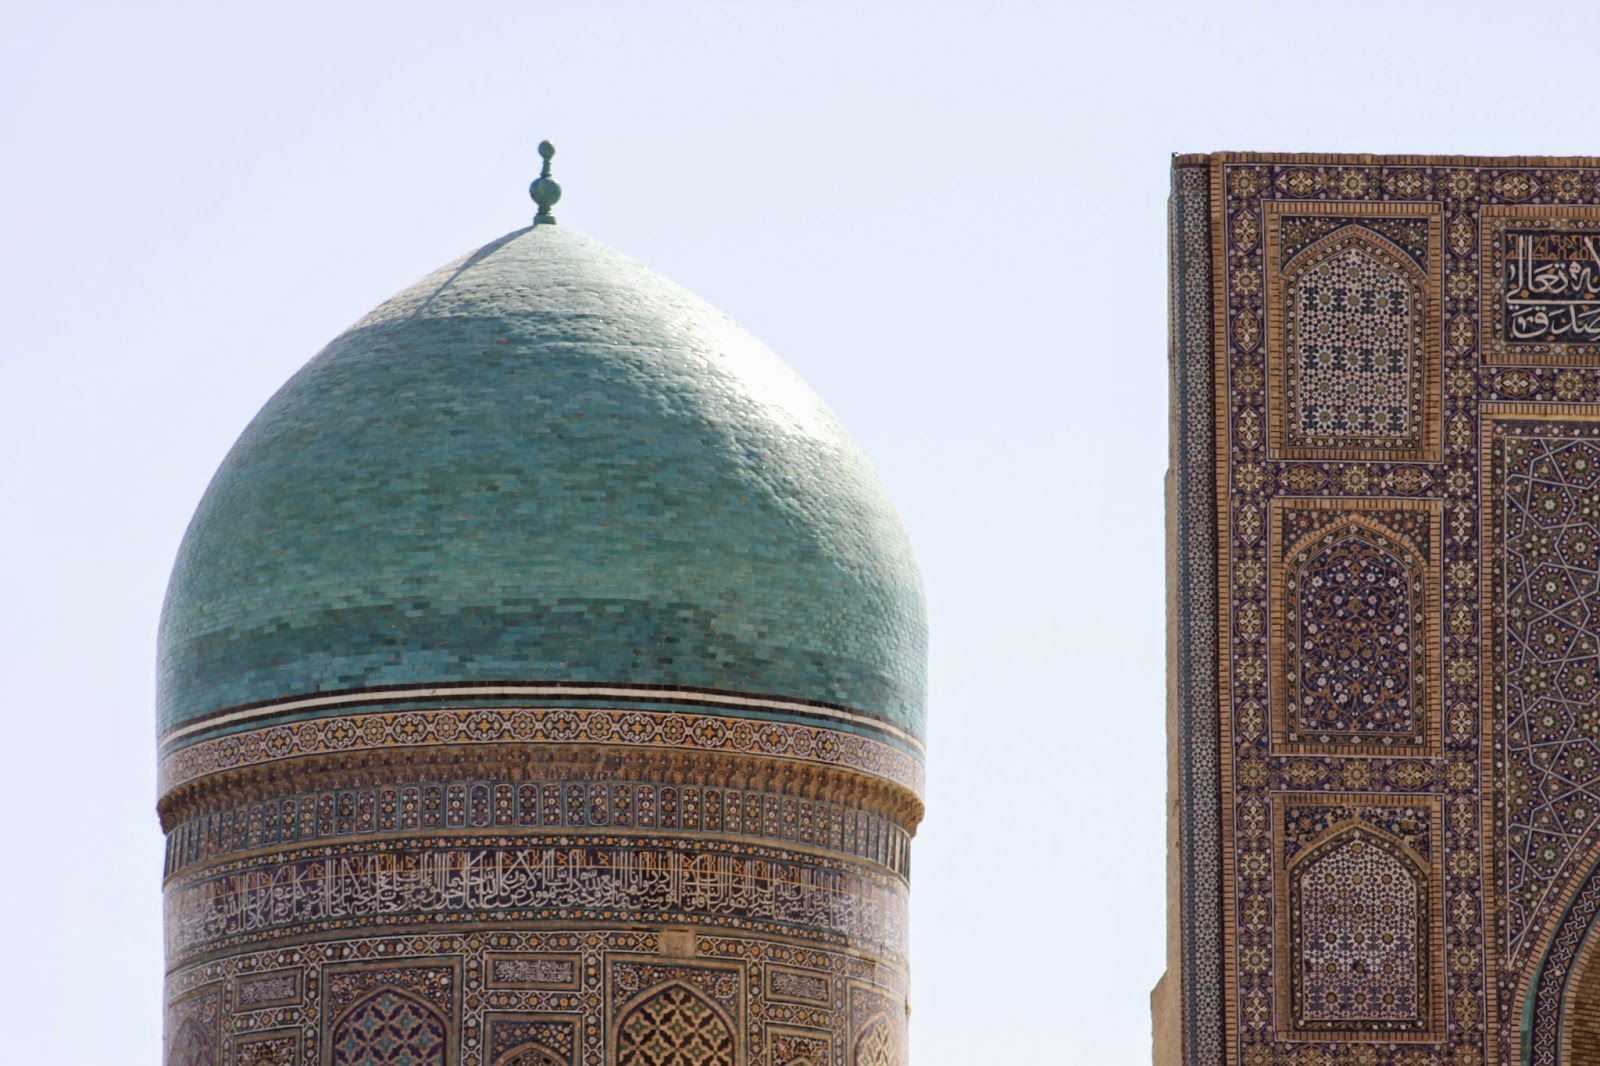 Voyage sac-au-dos/backpaking en Ouzbékistan